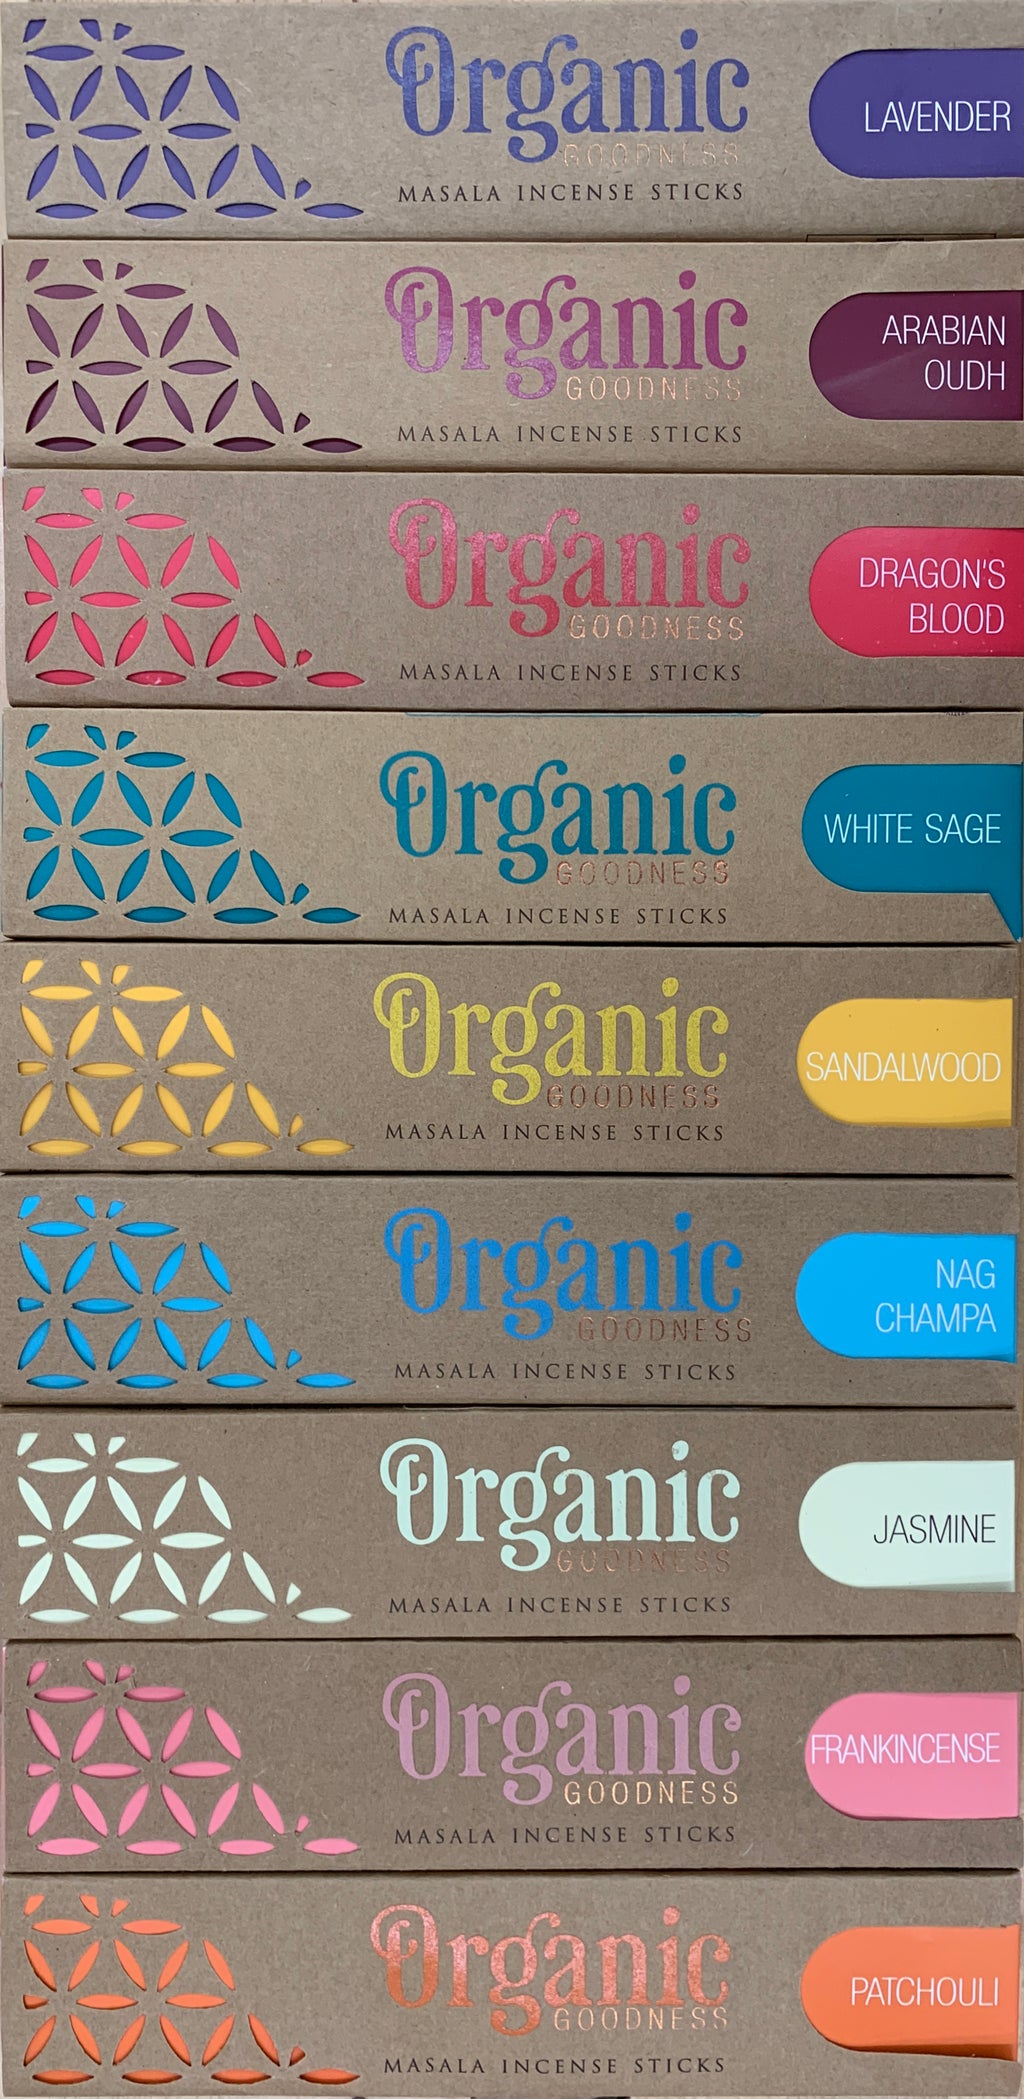 Organic Goodness - Masala Incense Sticks